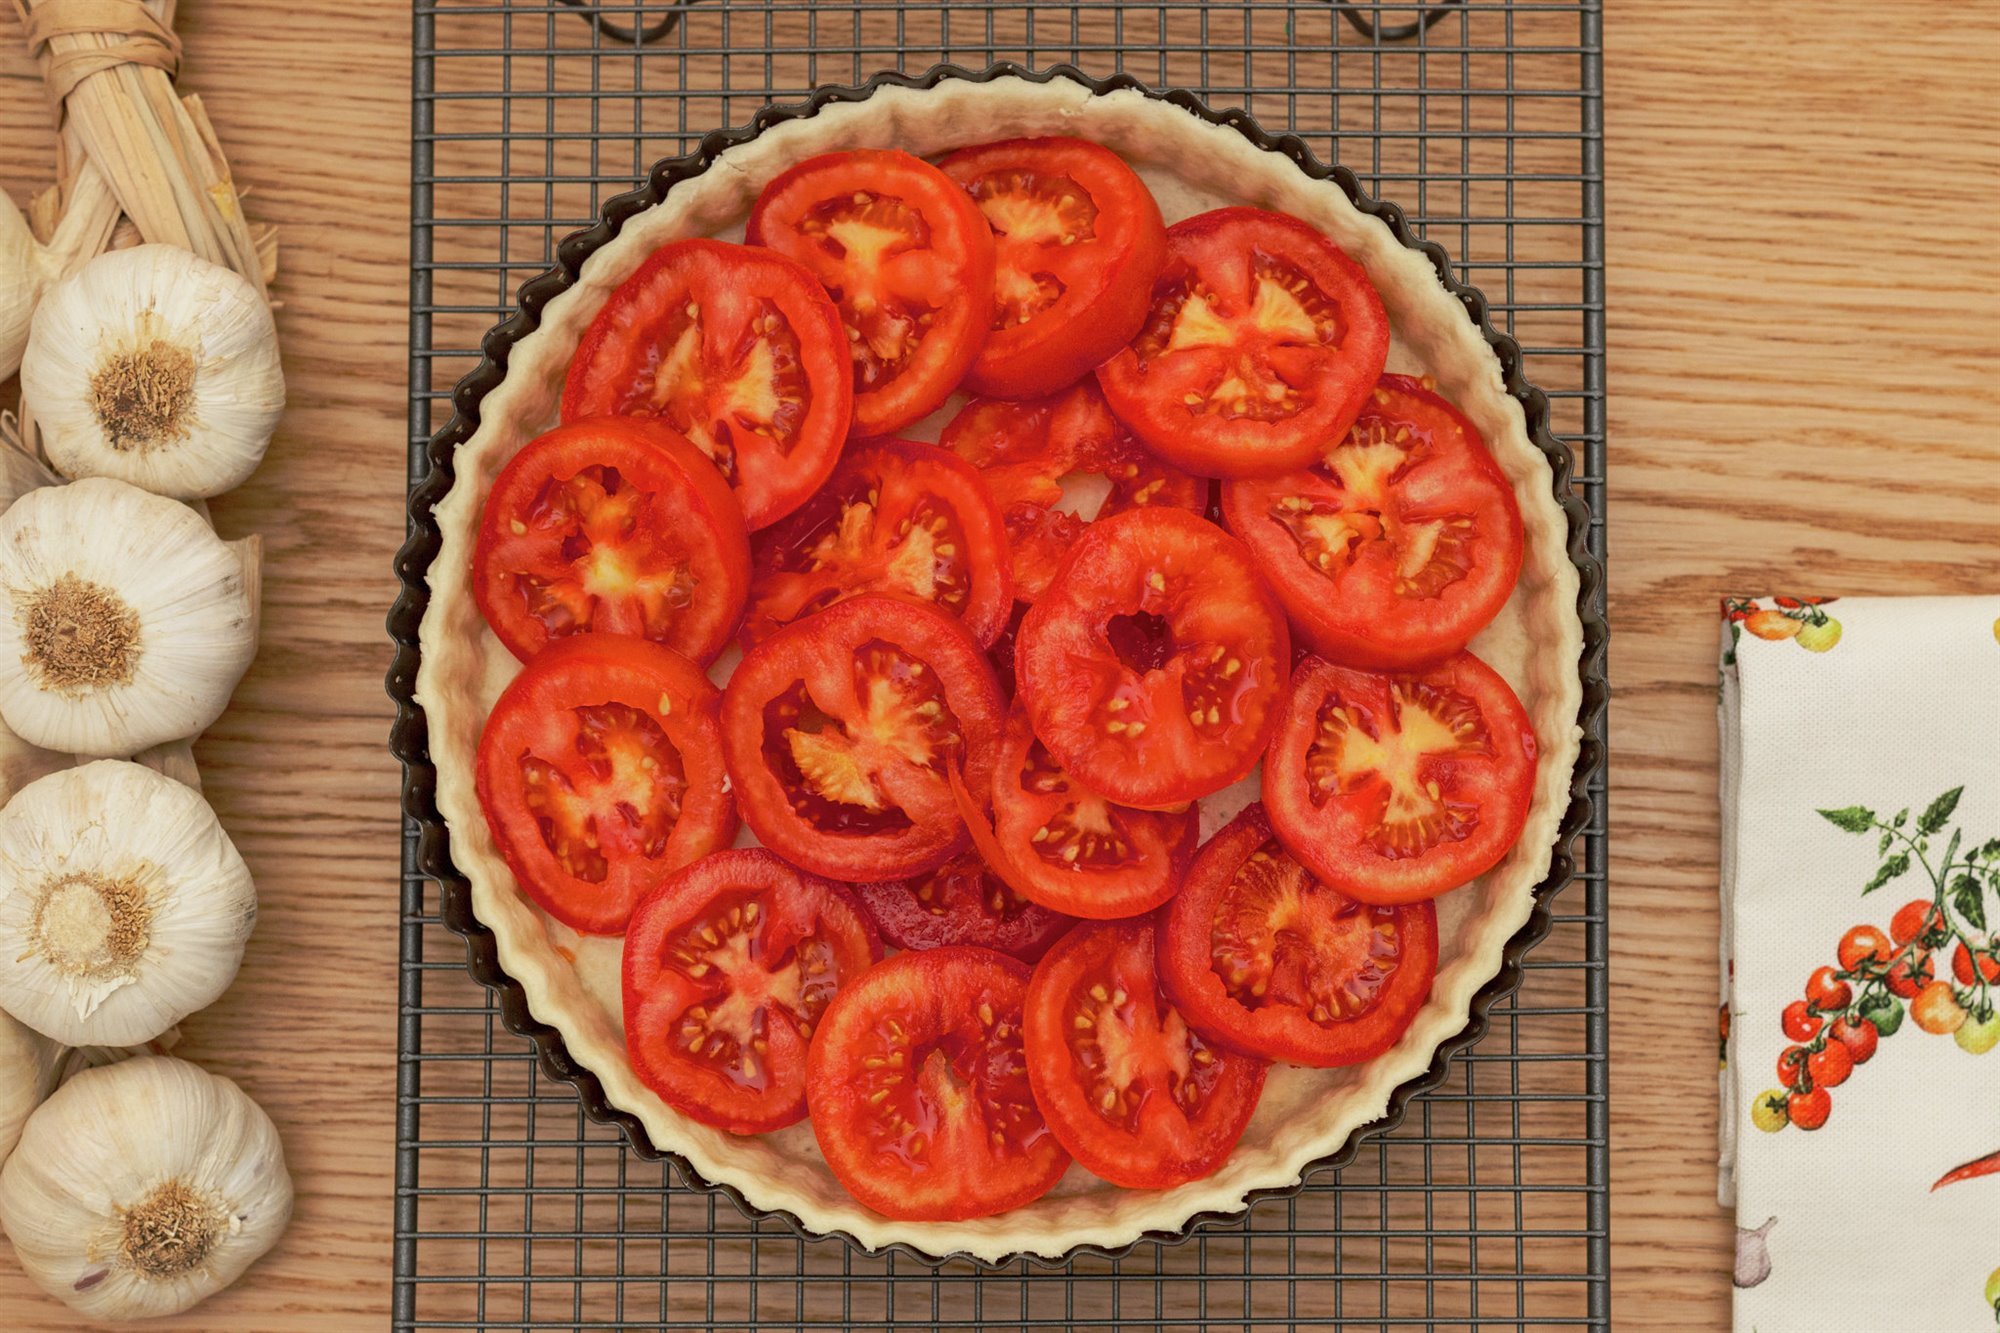 5. Distribuye el tomate